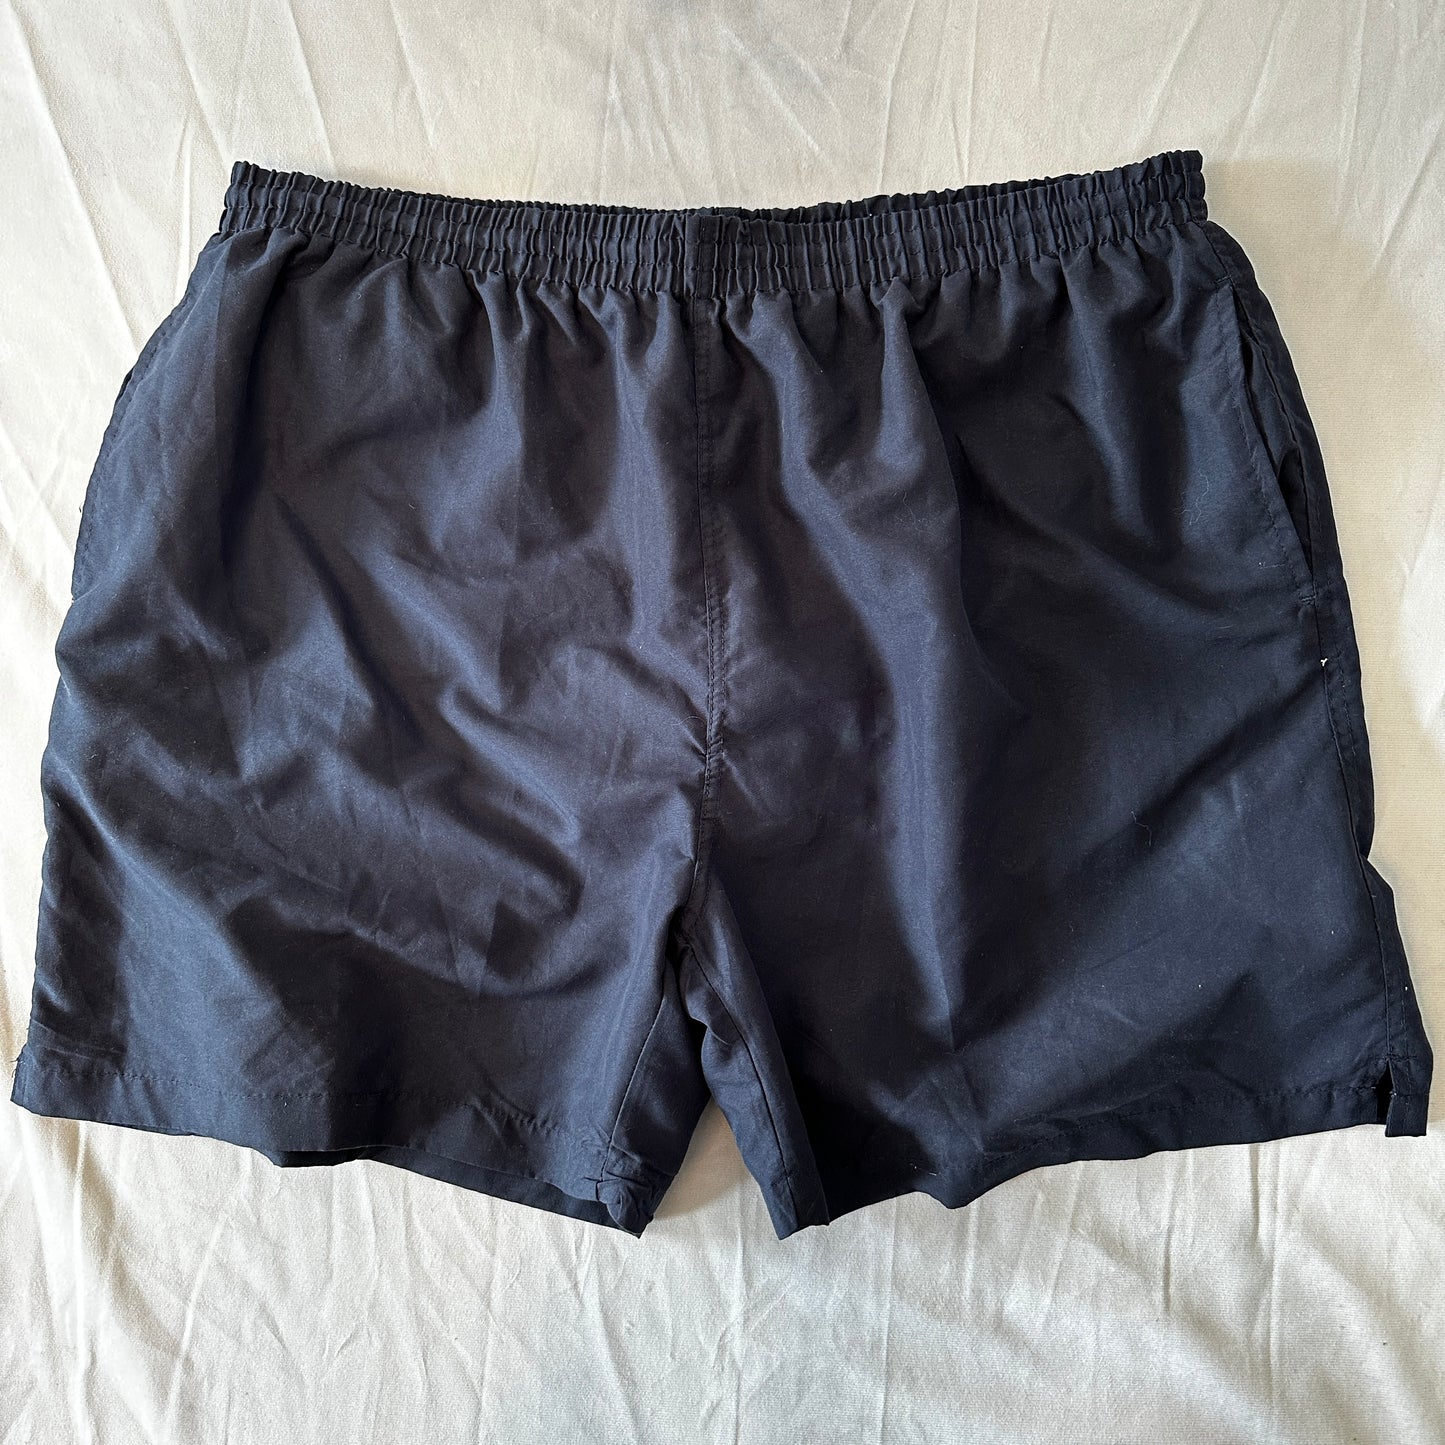 Castaways Swim Shorts - XL